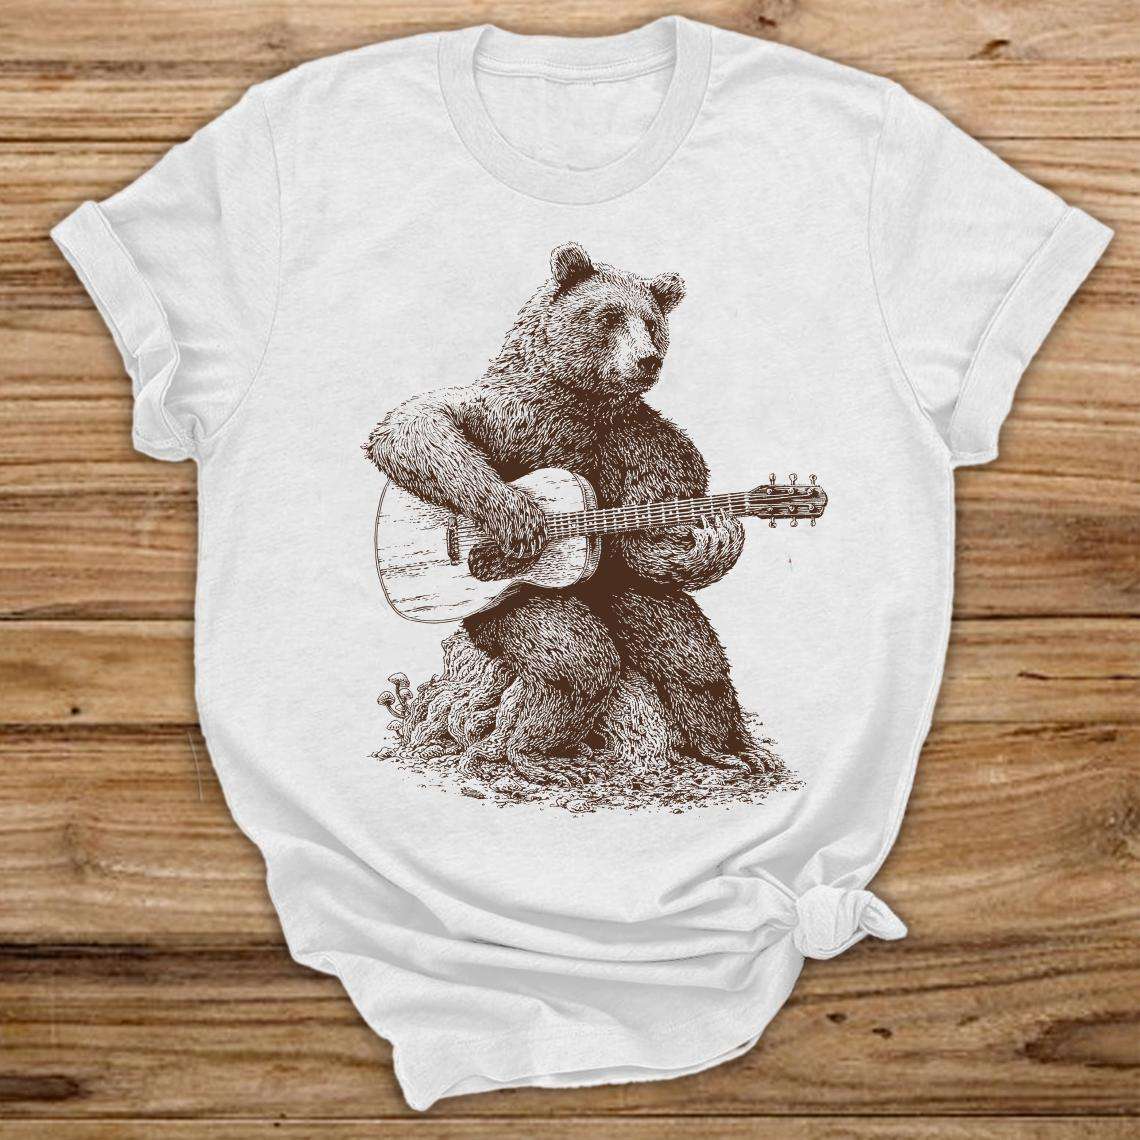 Bear playing guitar - The bear guitarist, classic guitar